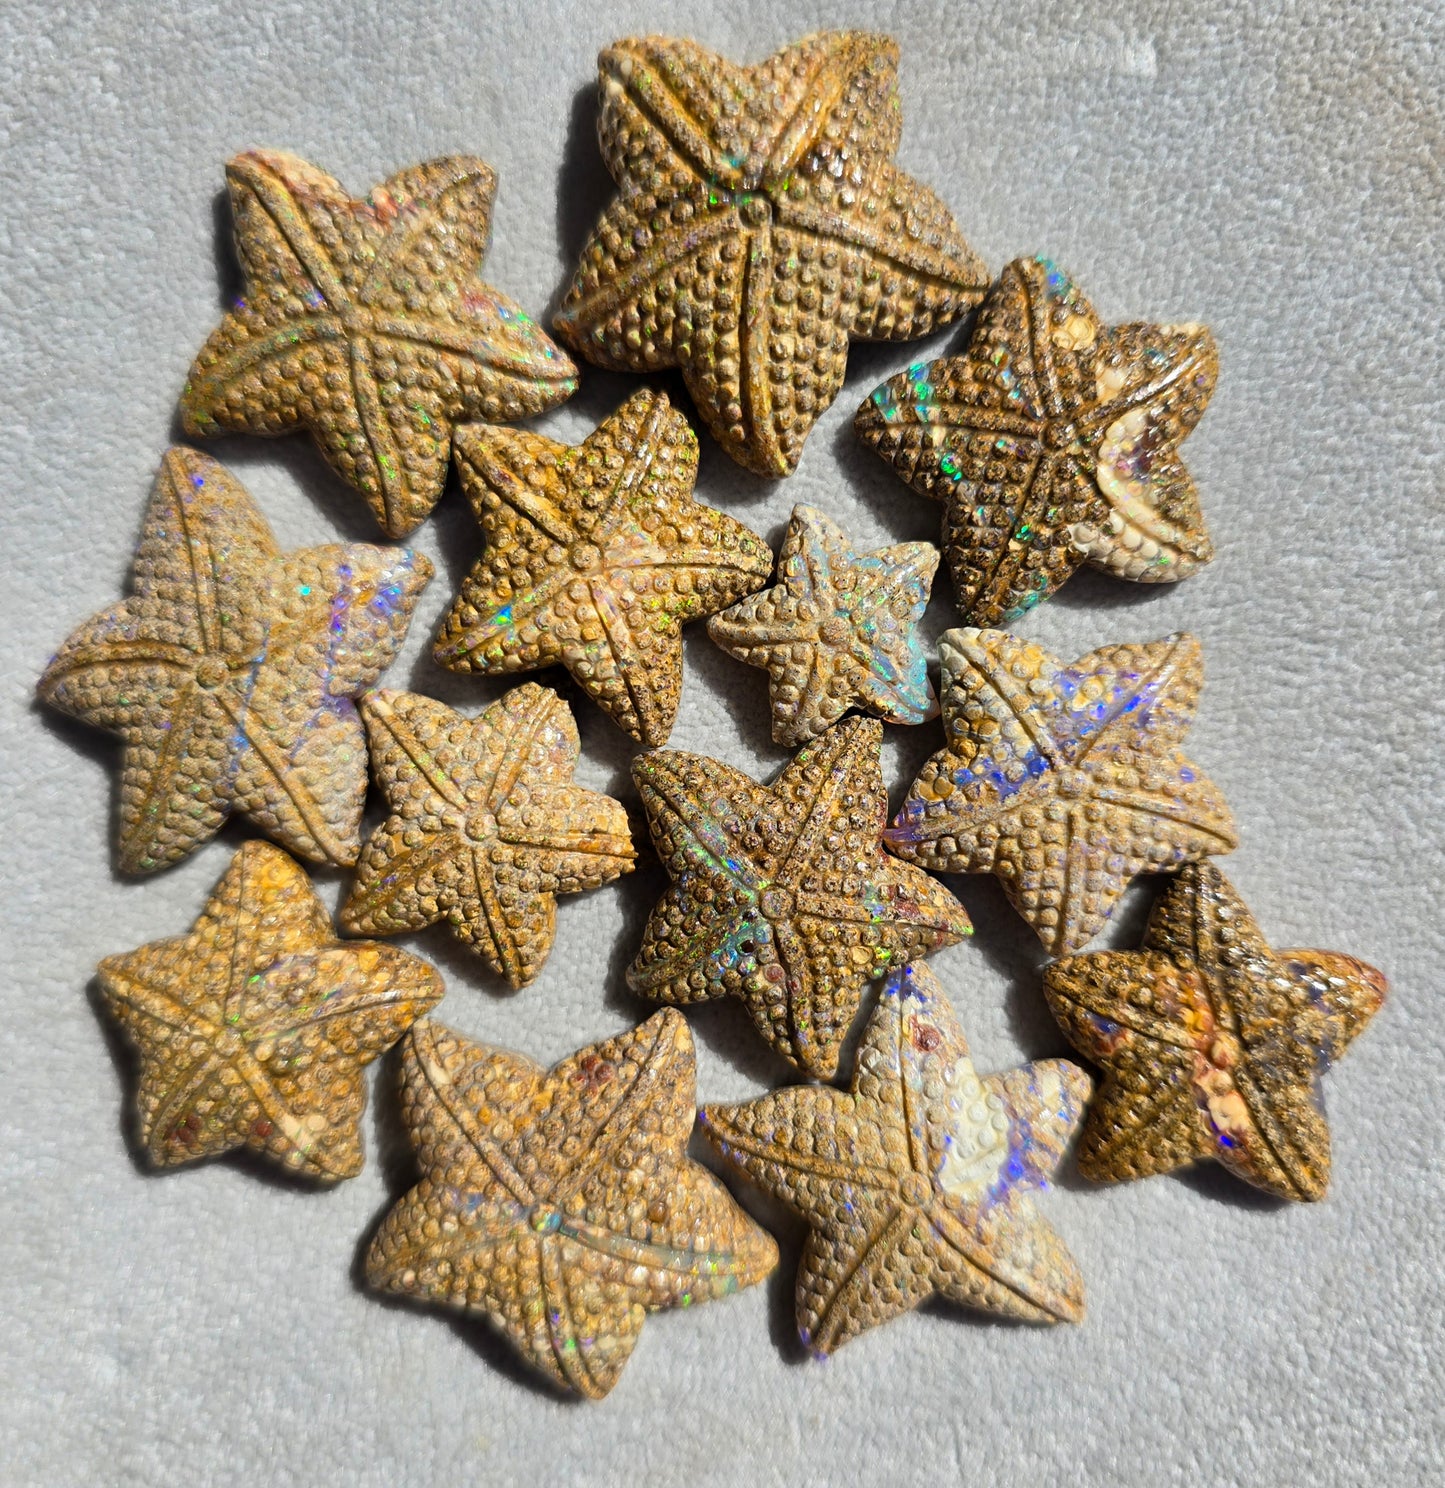 Exquisite 42.49 Ct Australian Boulder Opal Matrix Starfish Carving